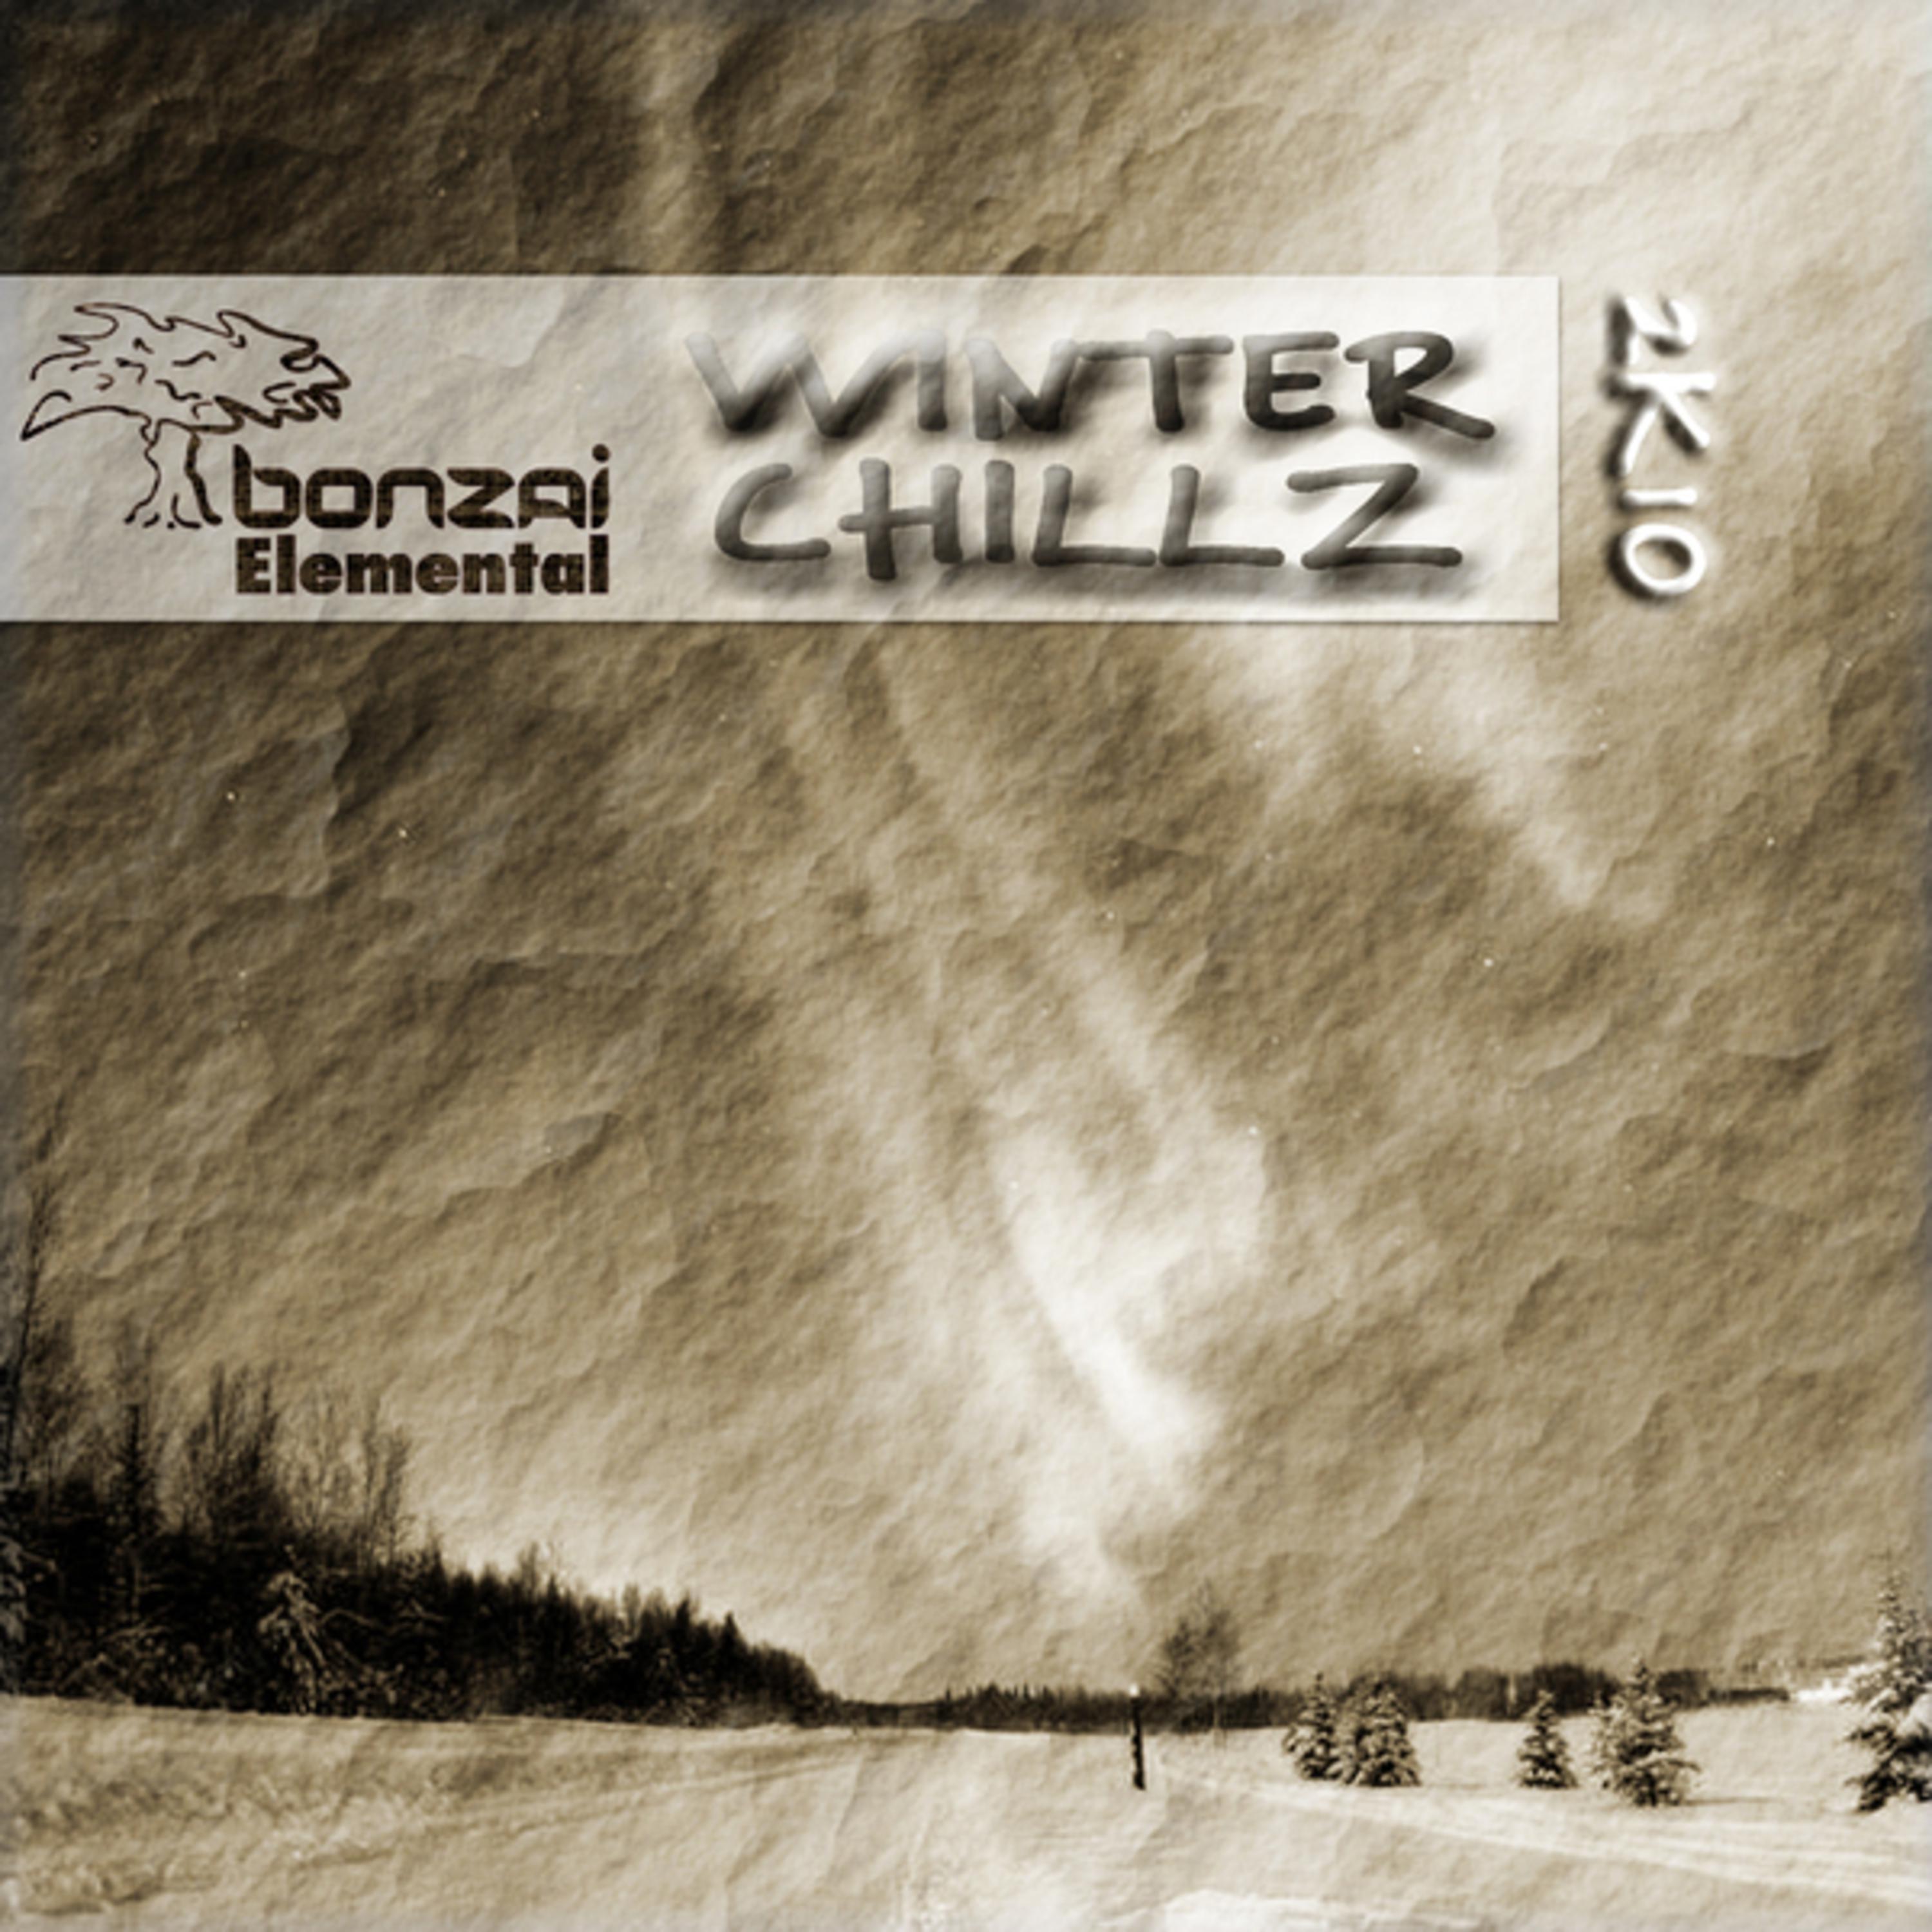 Bonzai Elemental - Winter Chillz 2k10